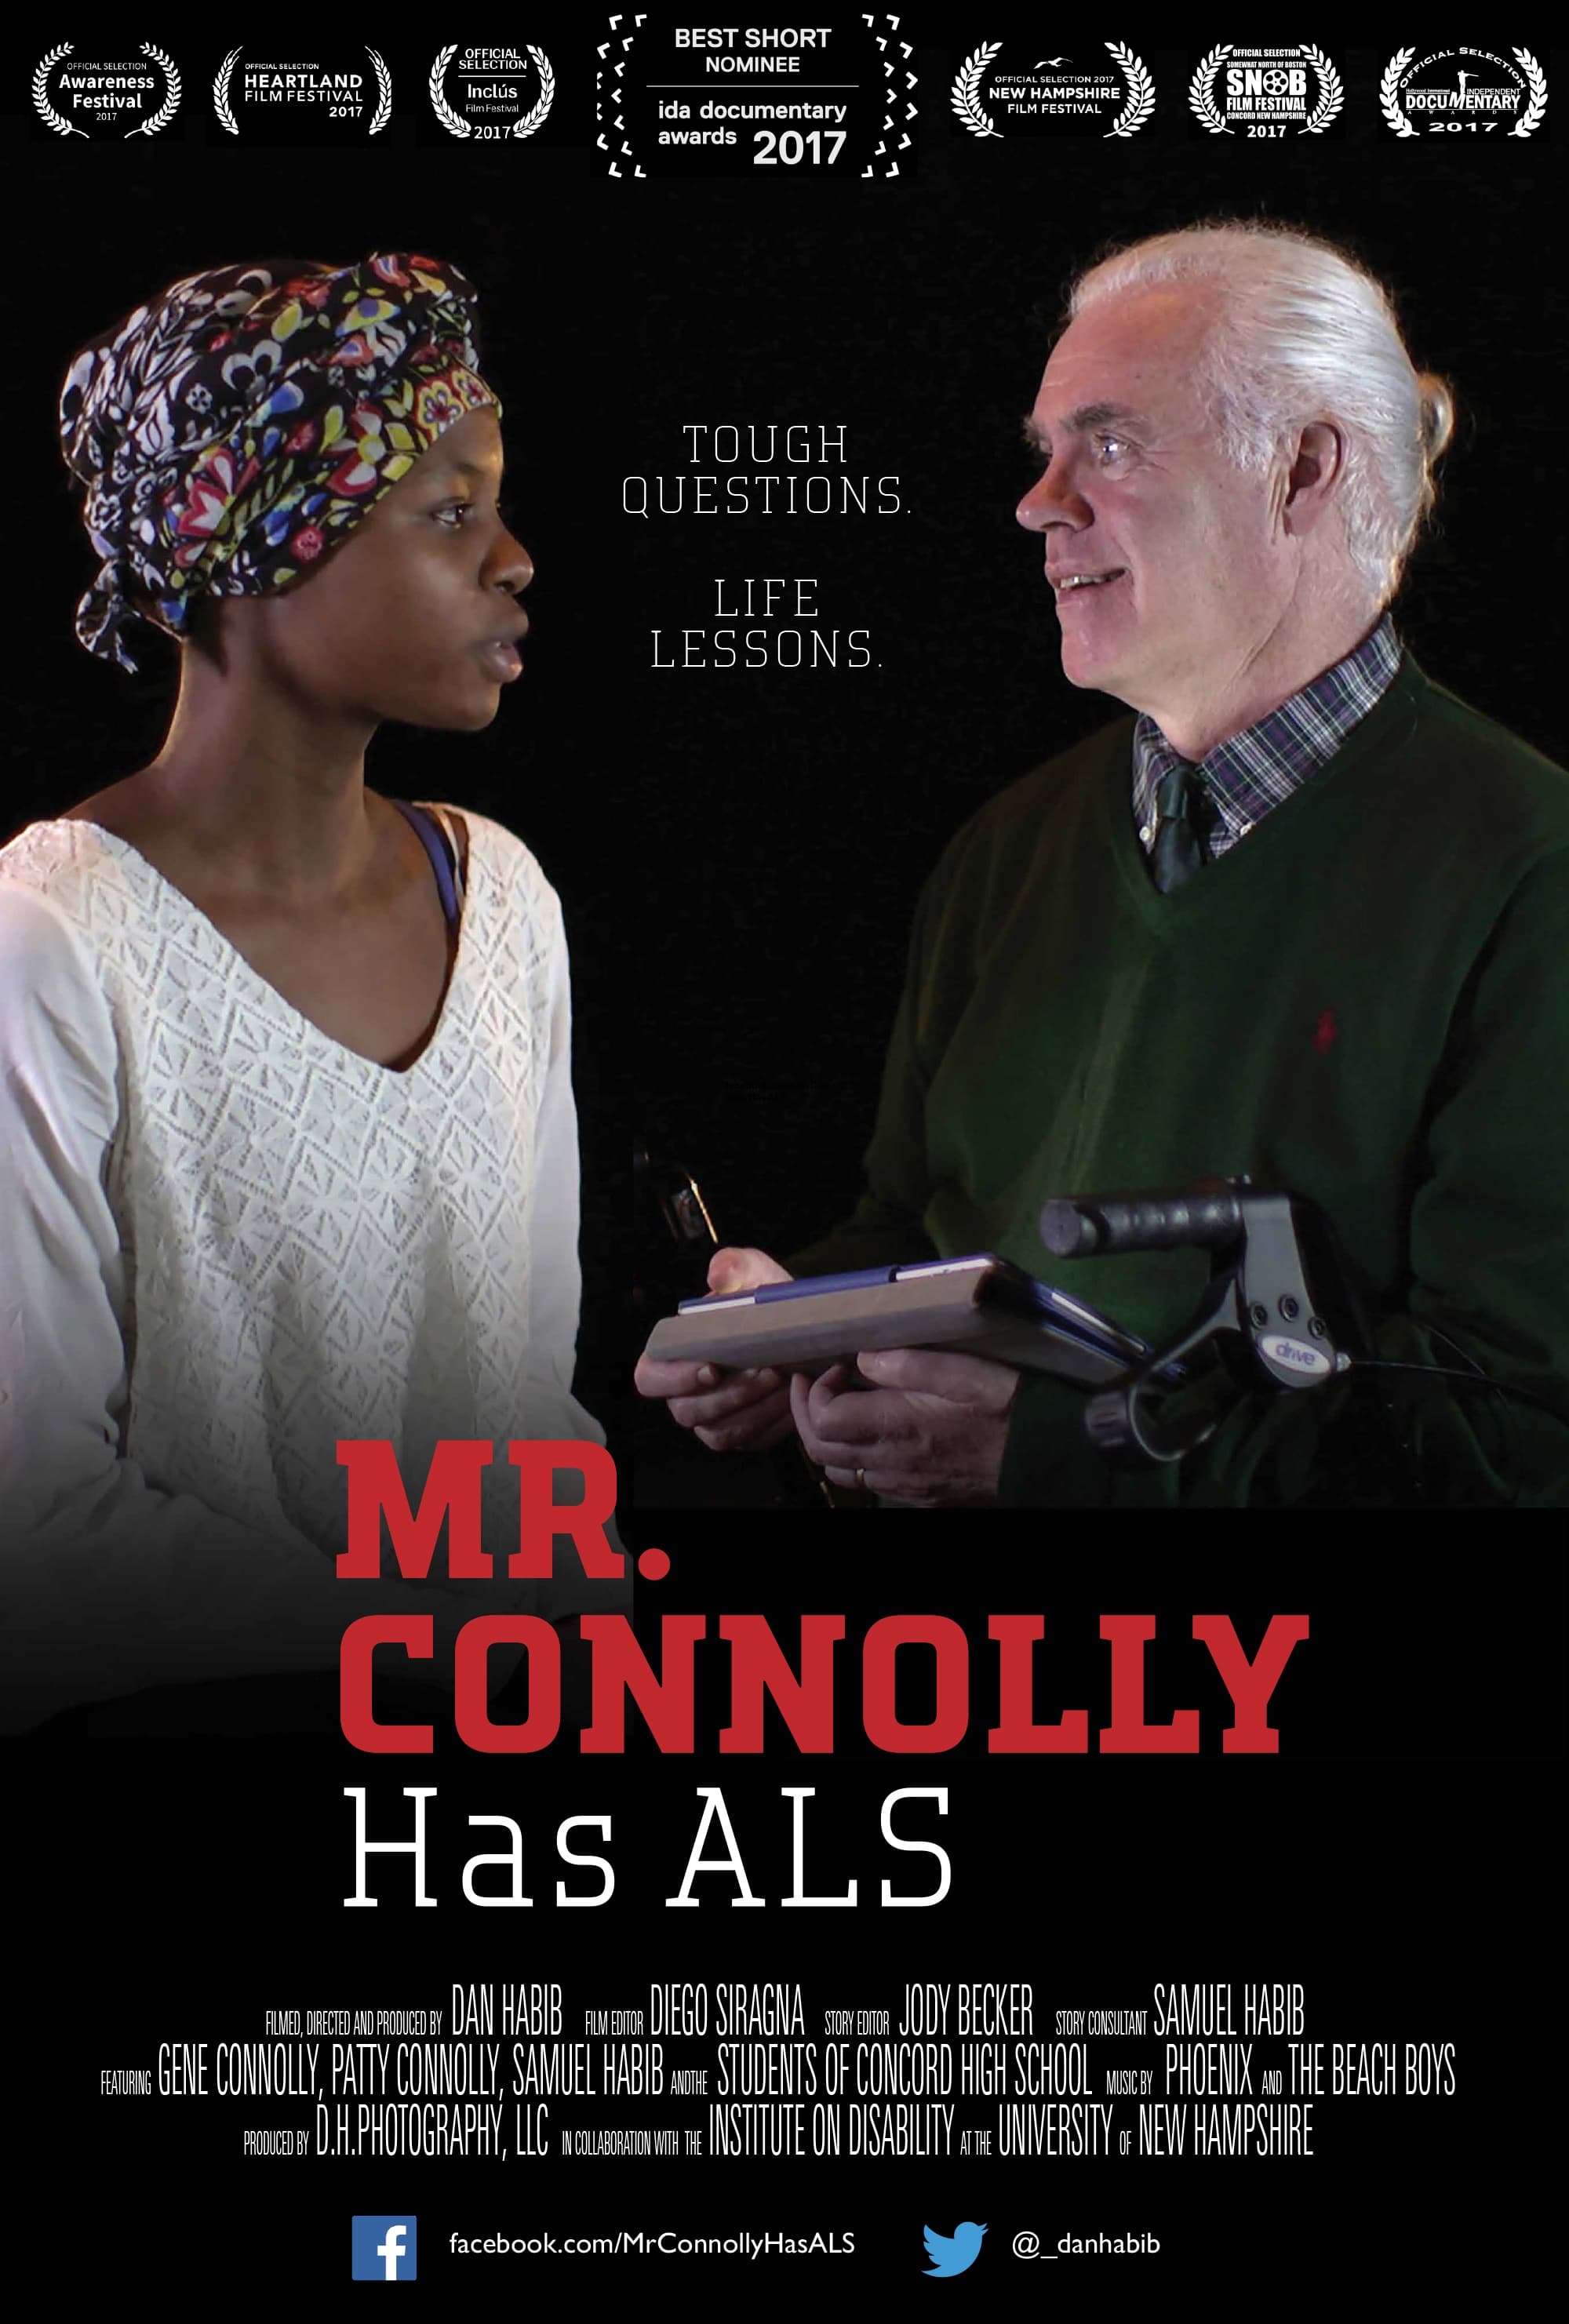 Mr. Connolly Has ALS